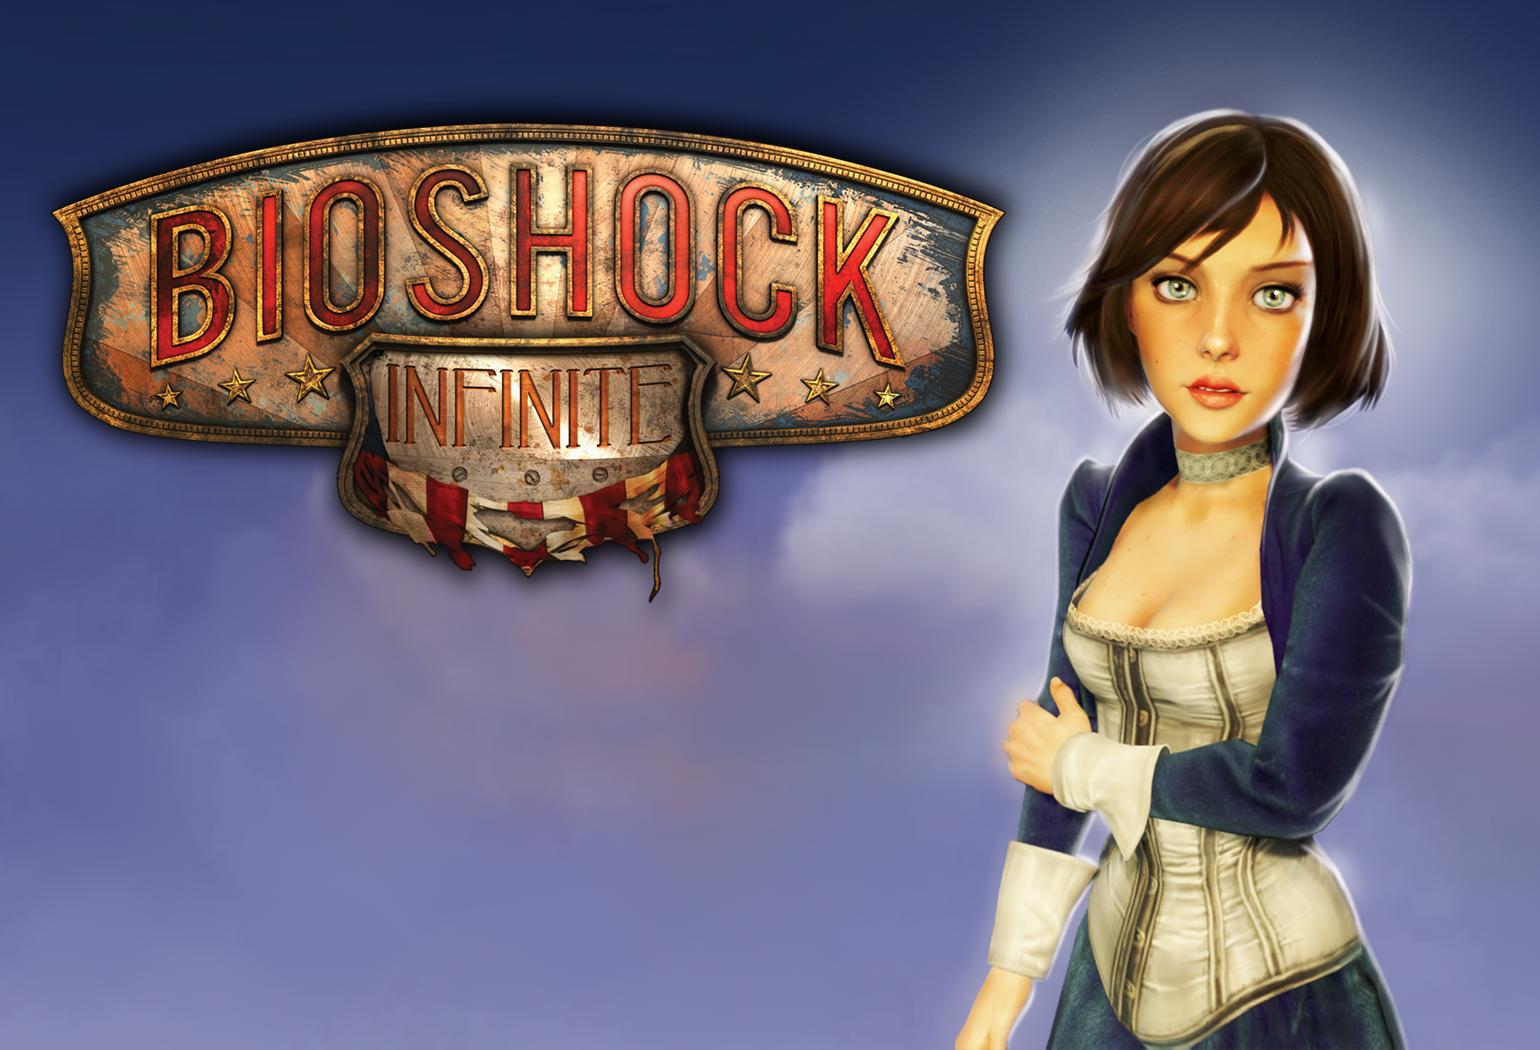 Bioshock infinite better than futa